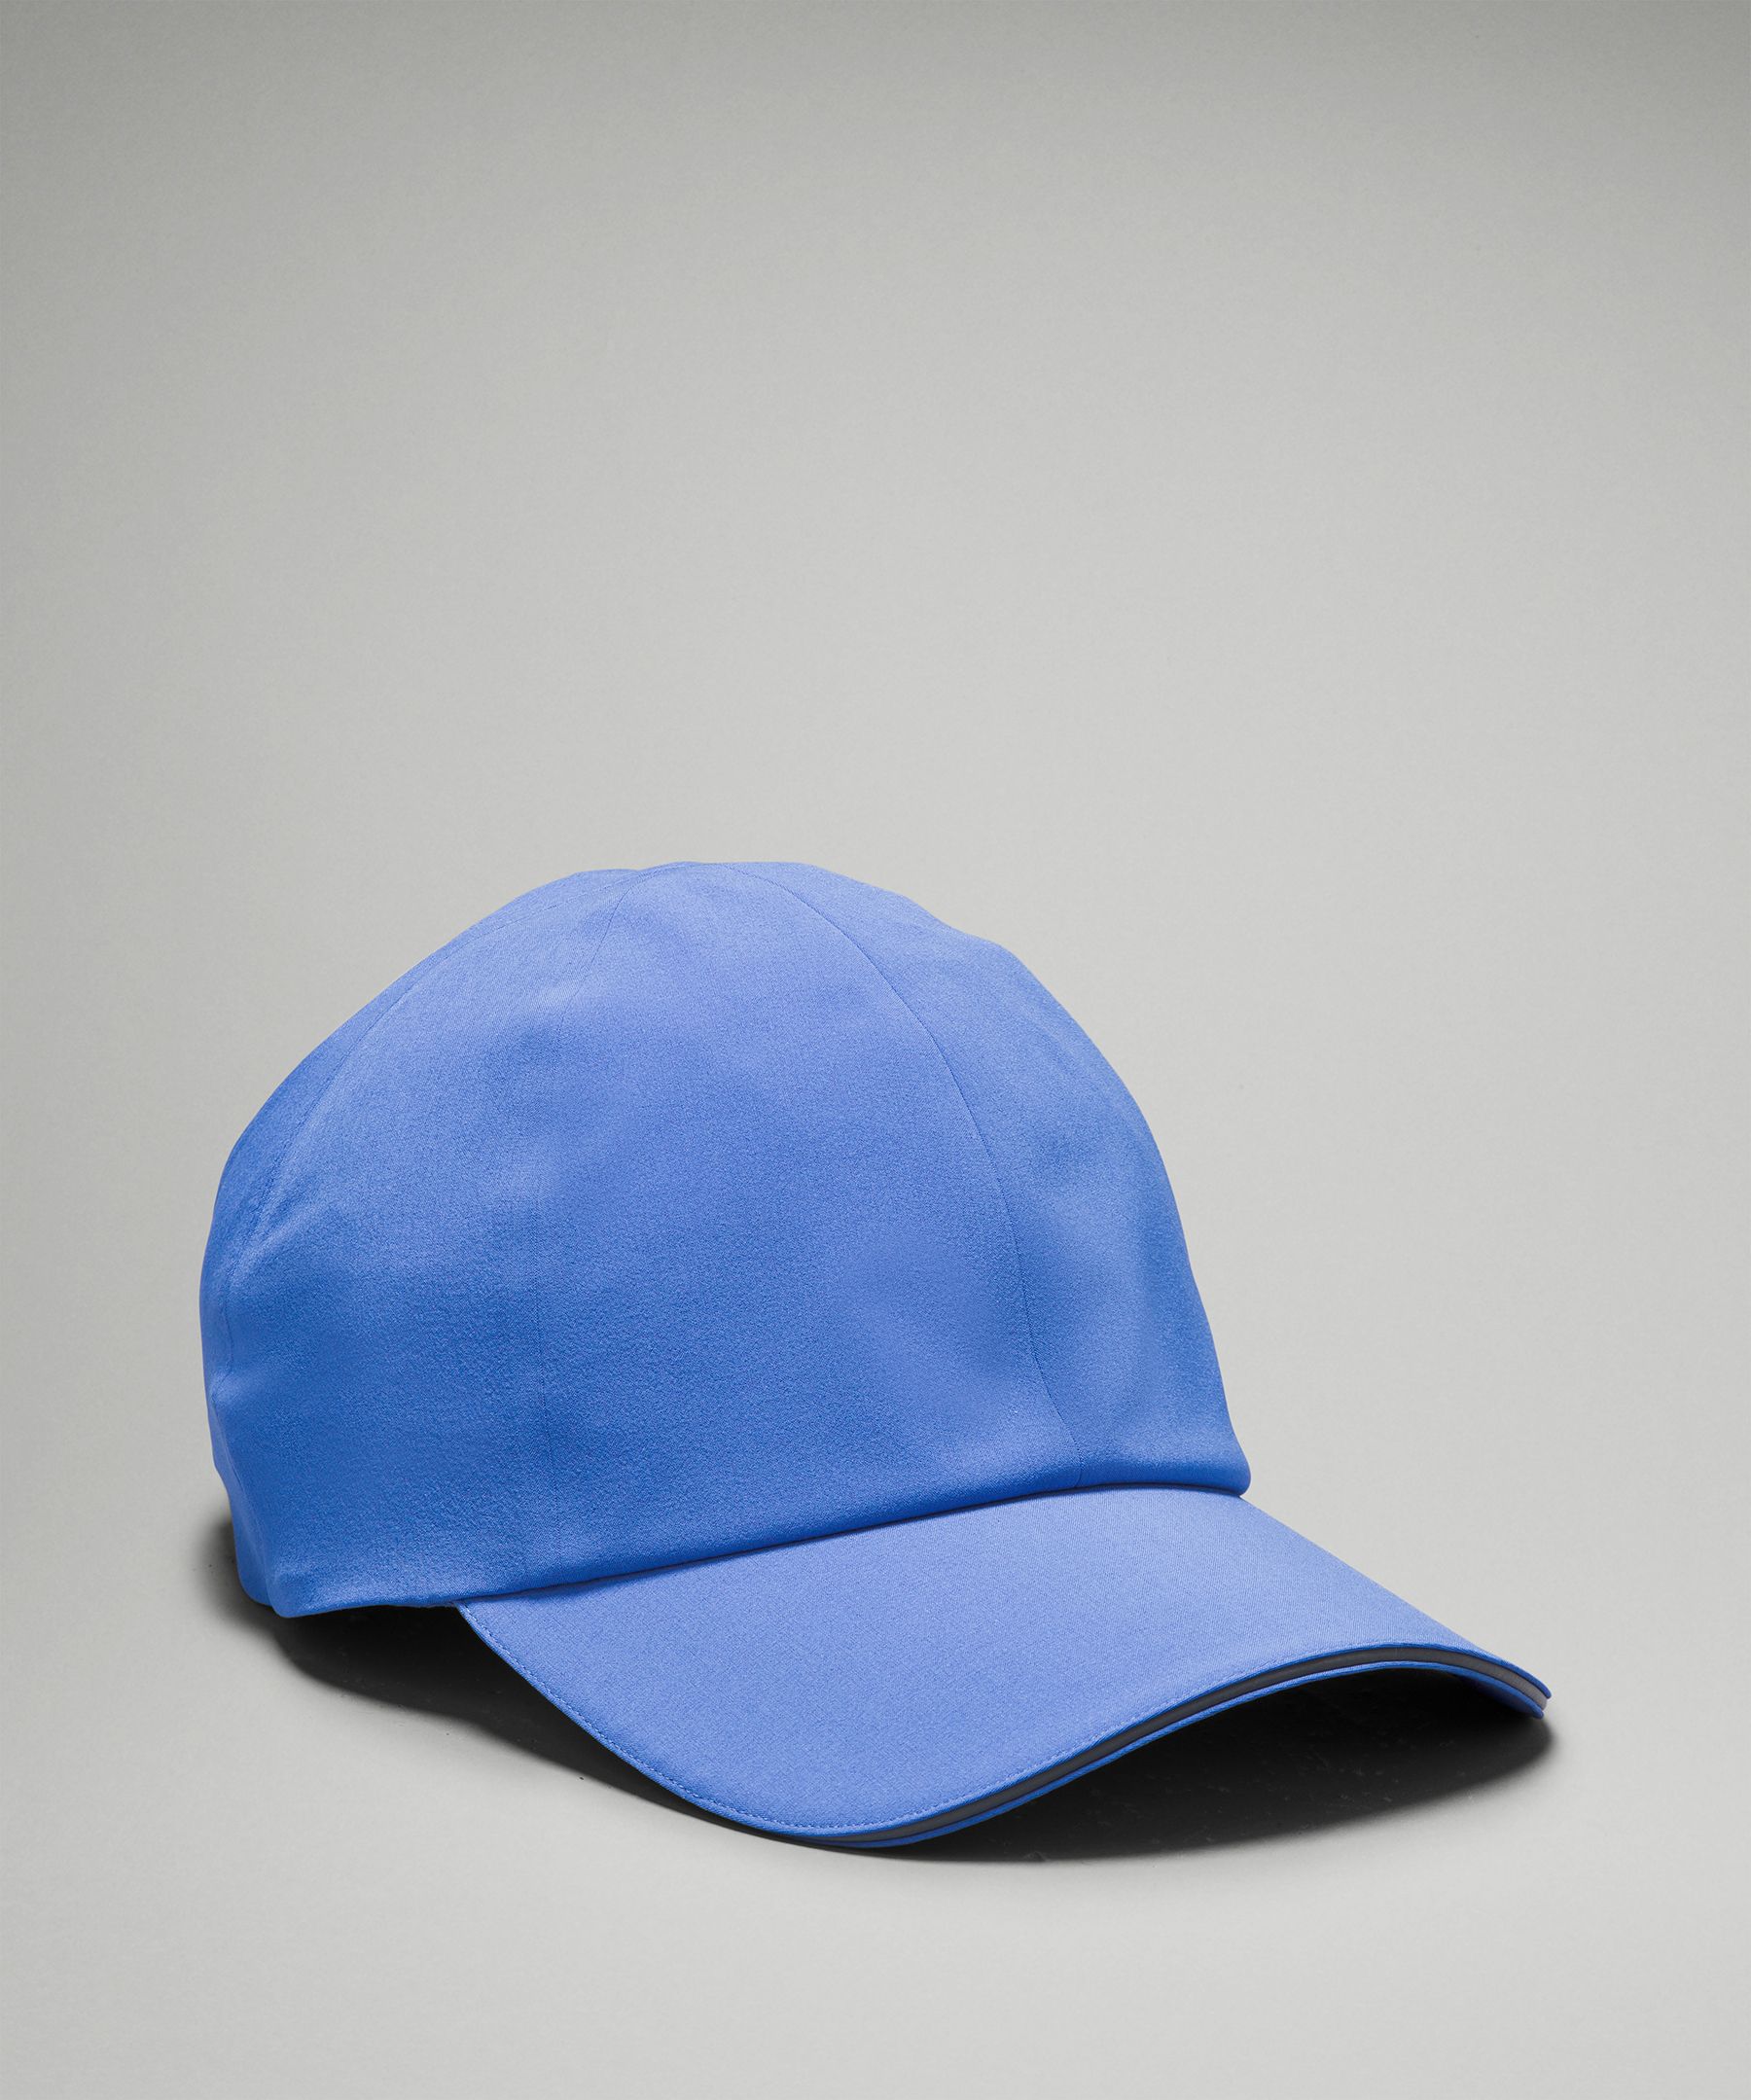 Lululemon athletica All Sport Wide-Brim Hat, Unisex Hats